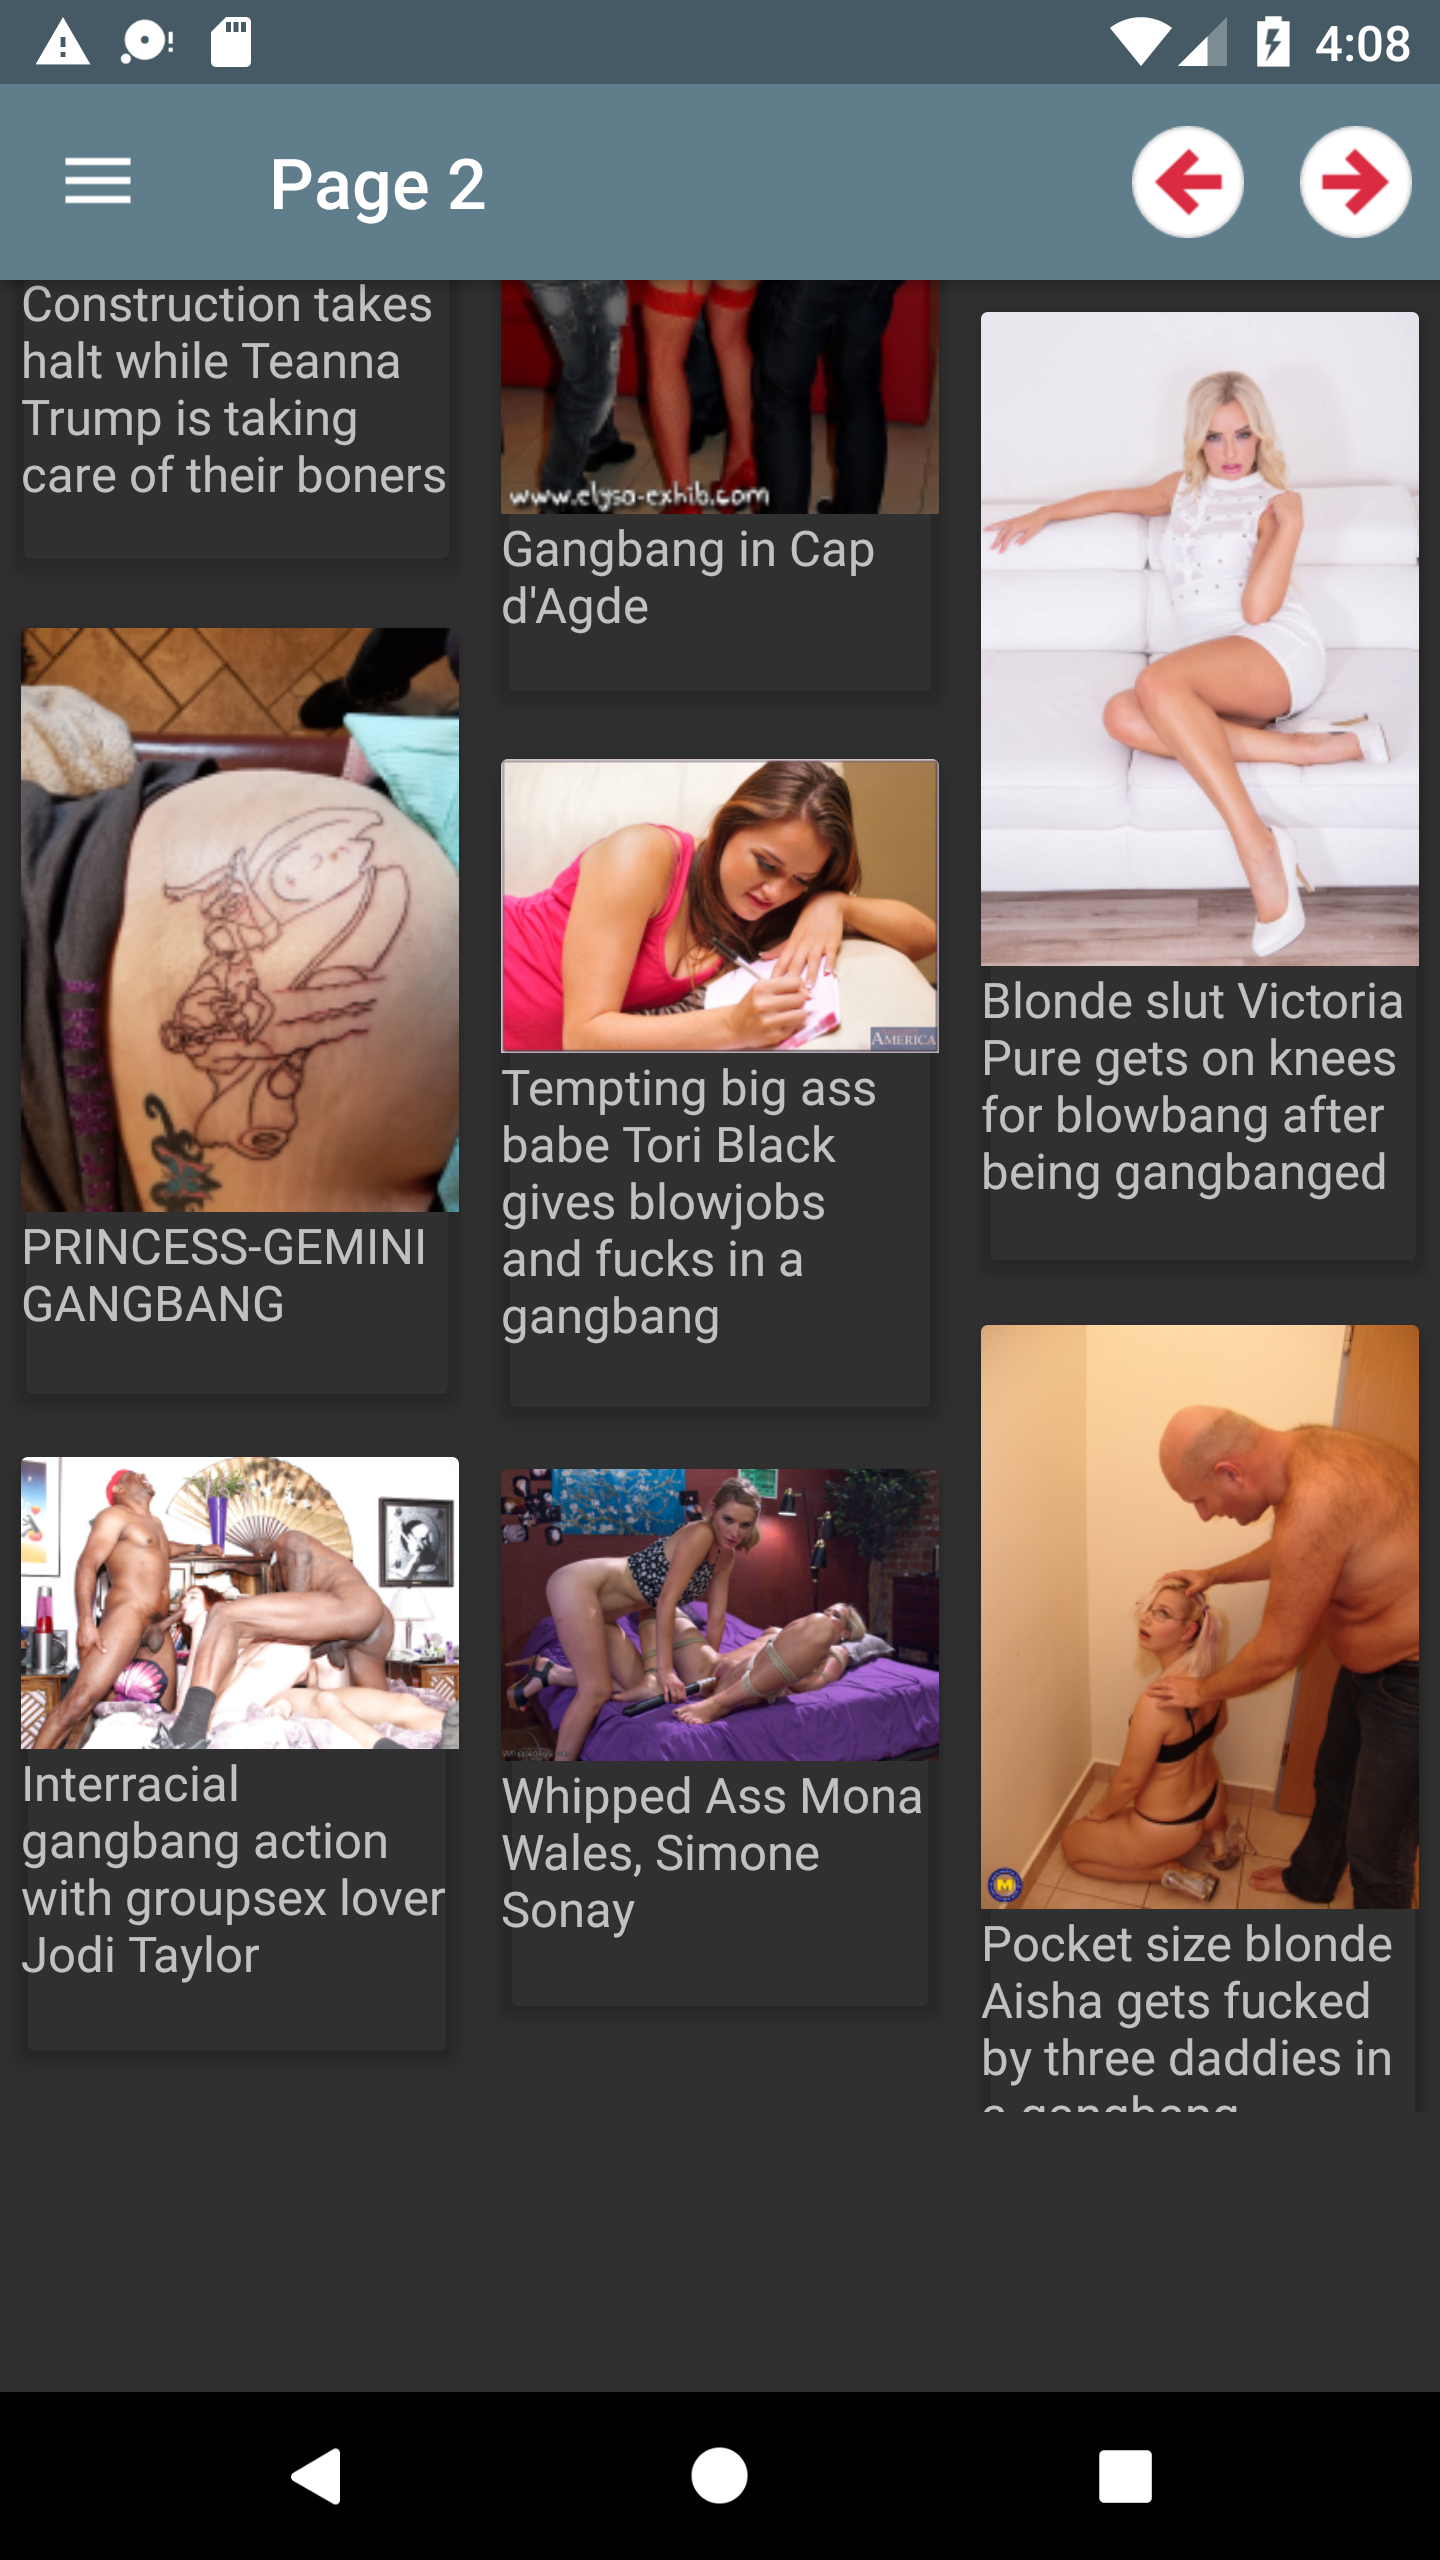 Gangbang Porn pornstars,hentai,android,sexy,adult,wallpaper,pics,apps,porn,hot,app,galleries,image,manga,erotic,hintai,download,gallery